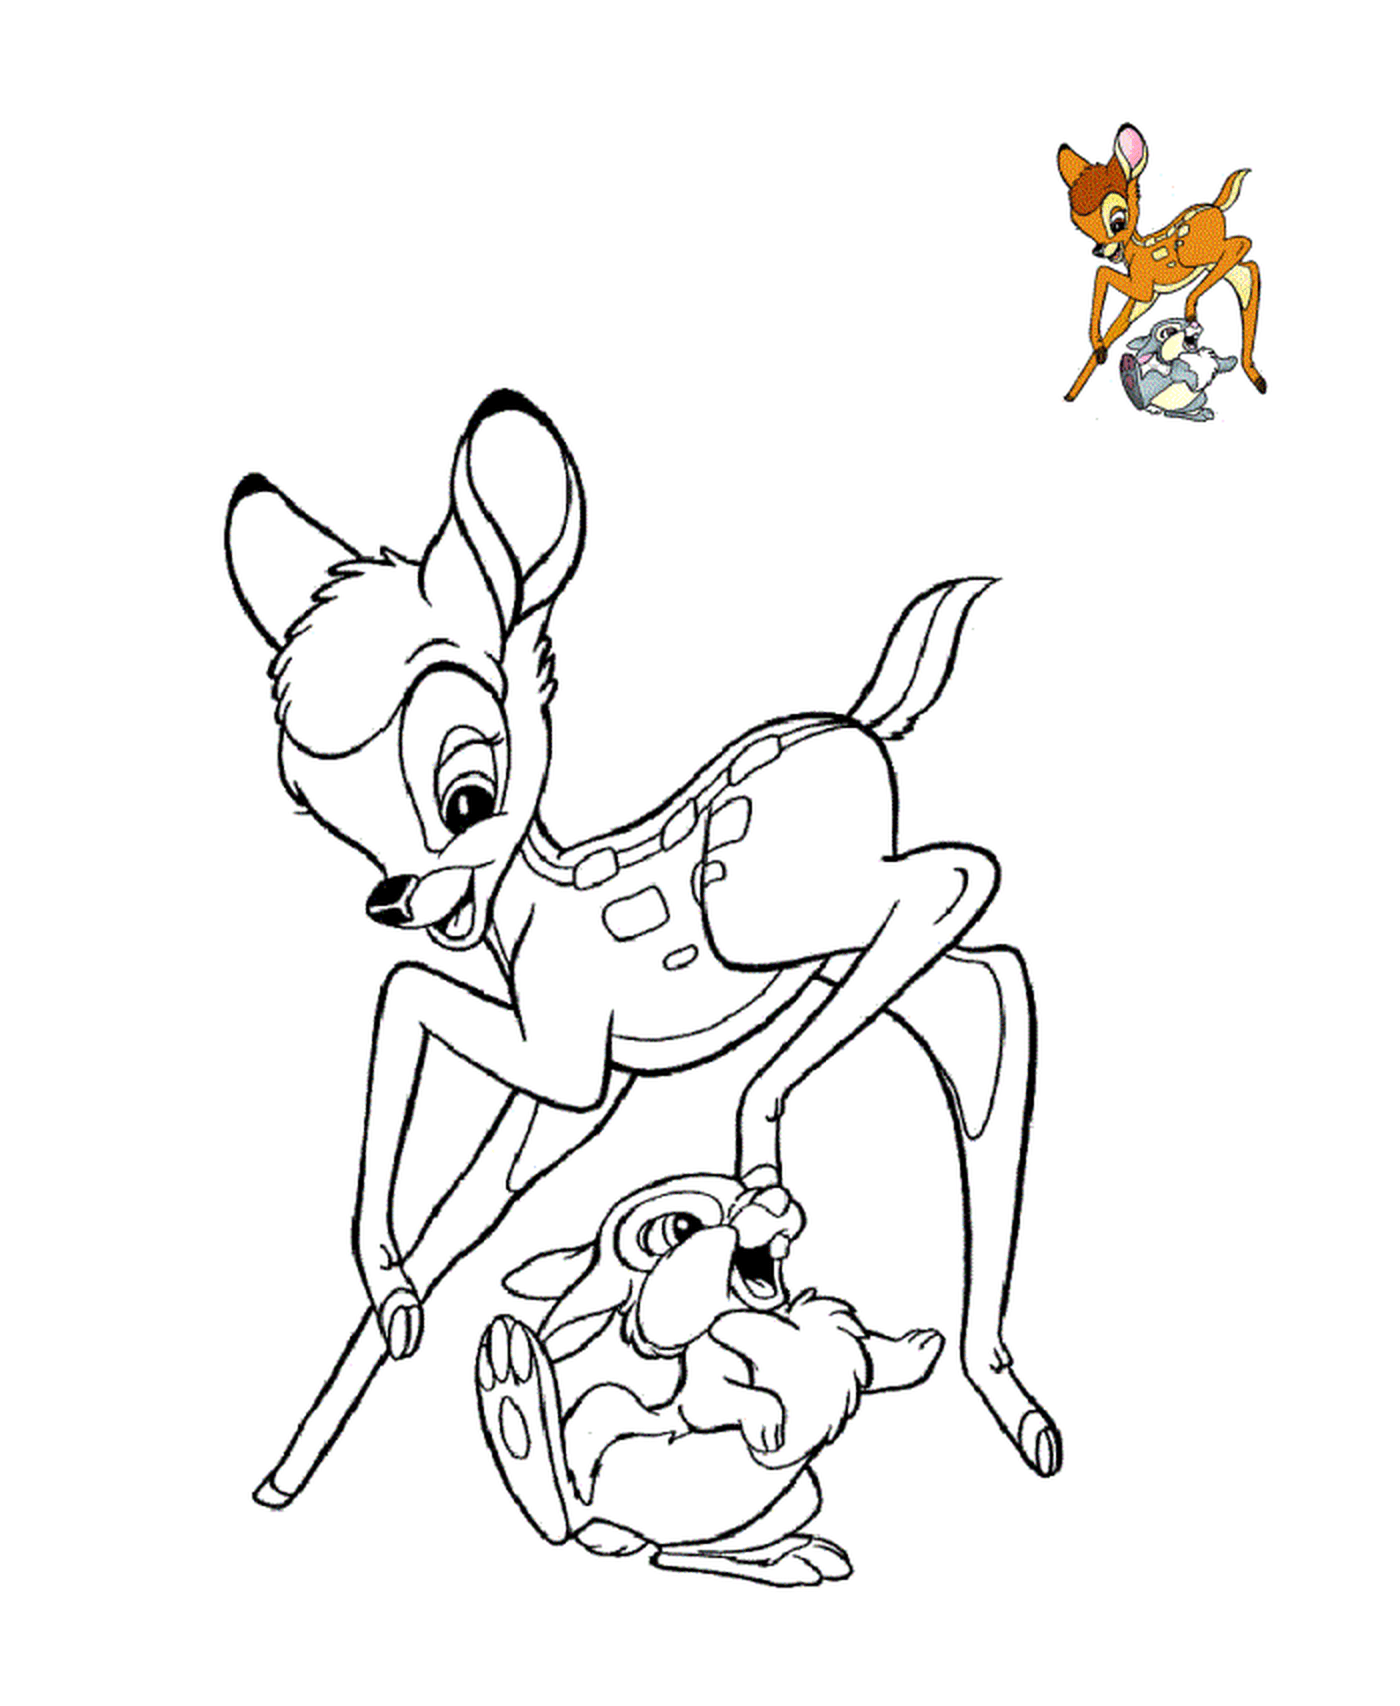  bambi and panpan 